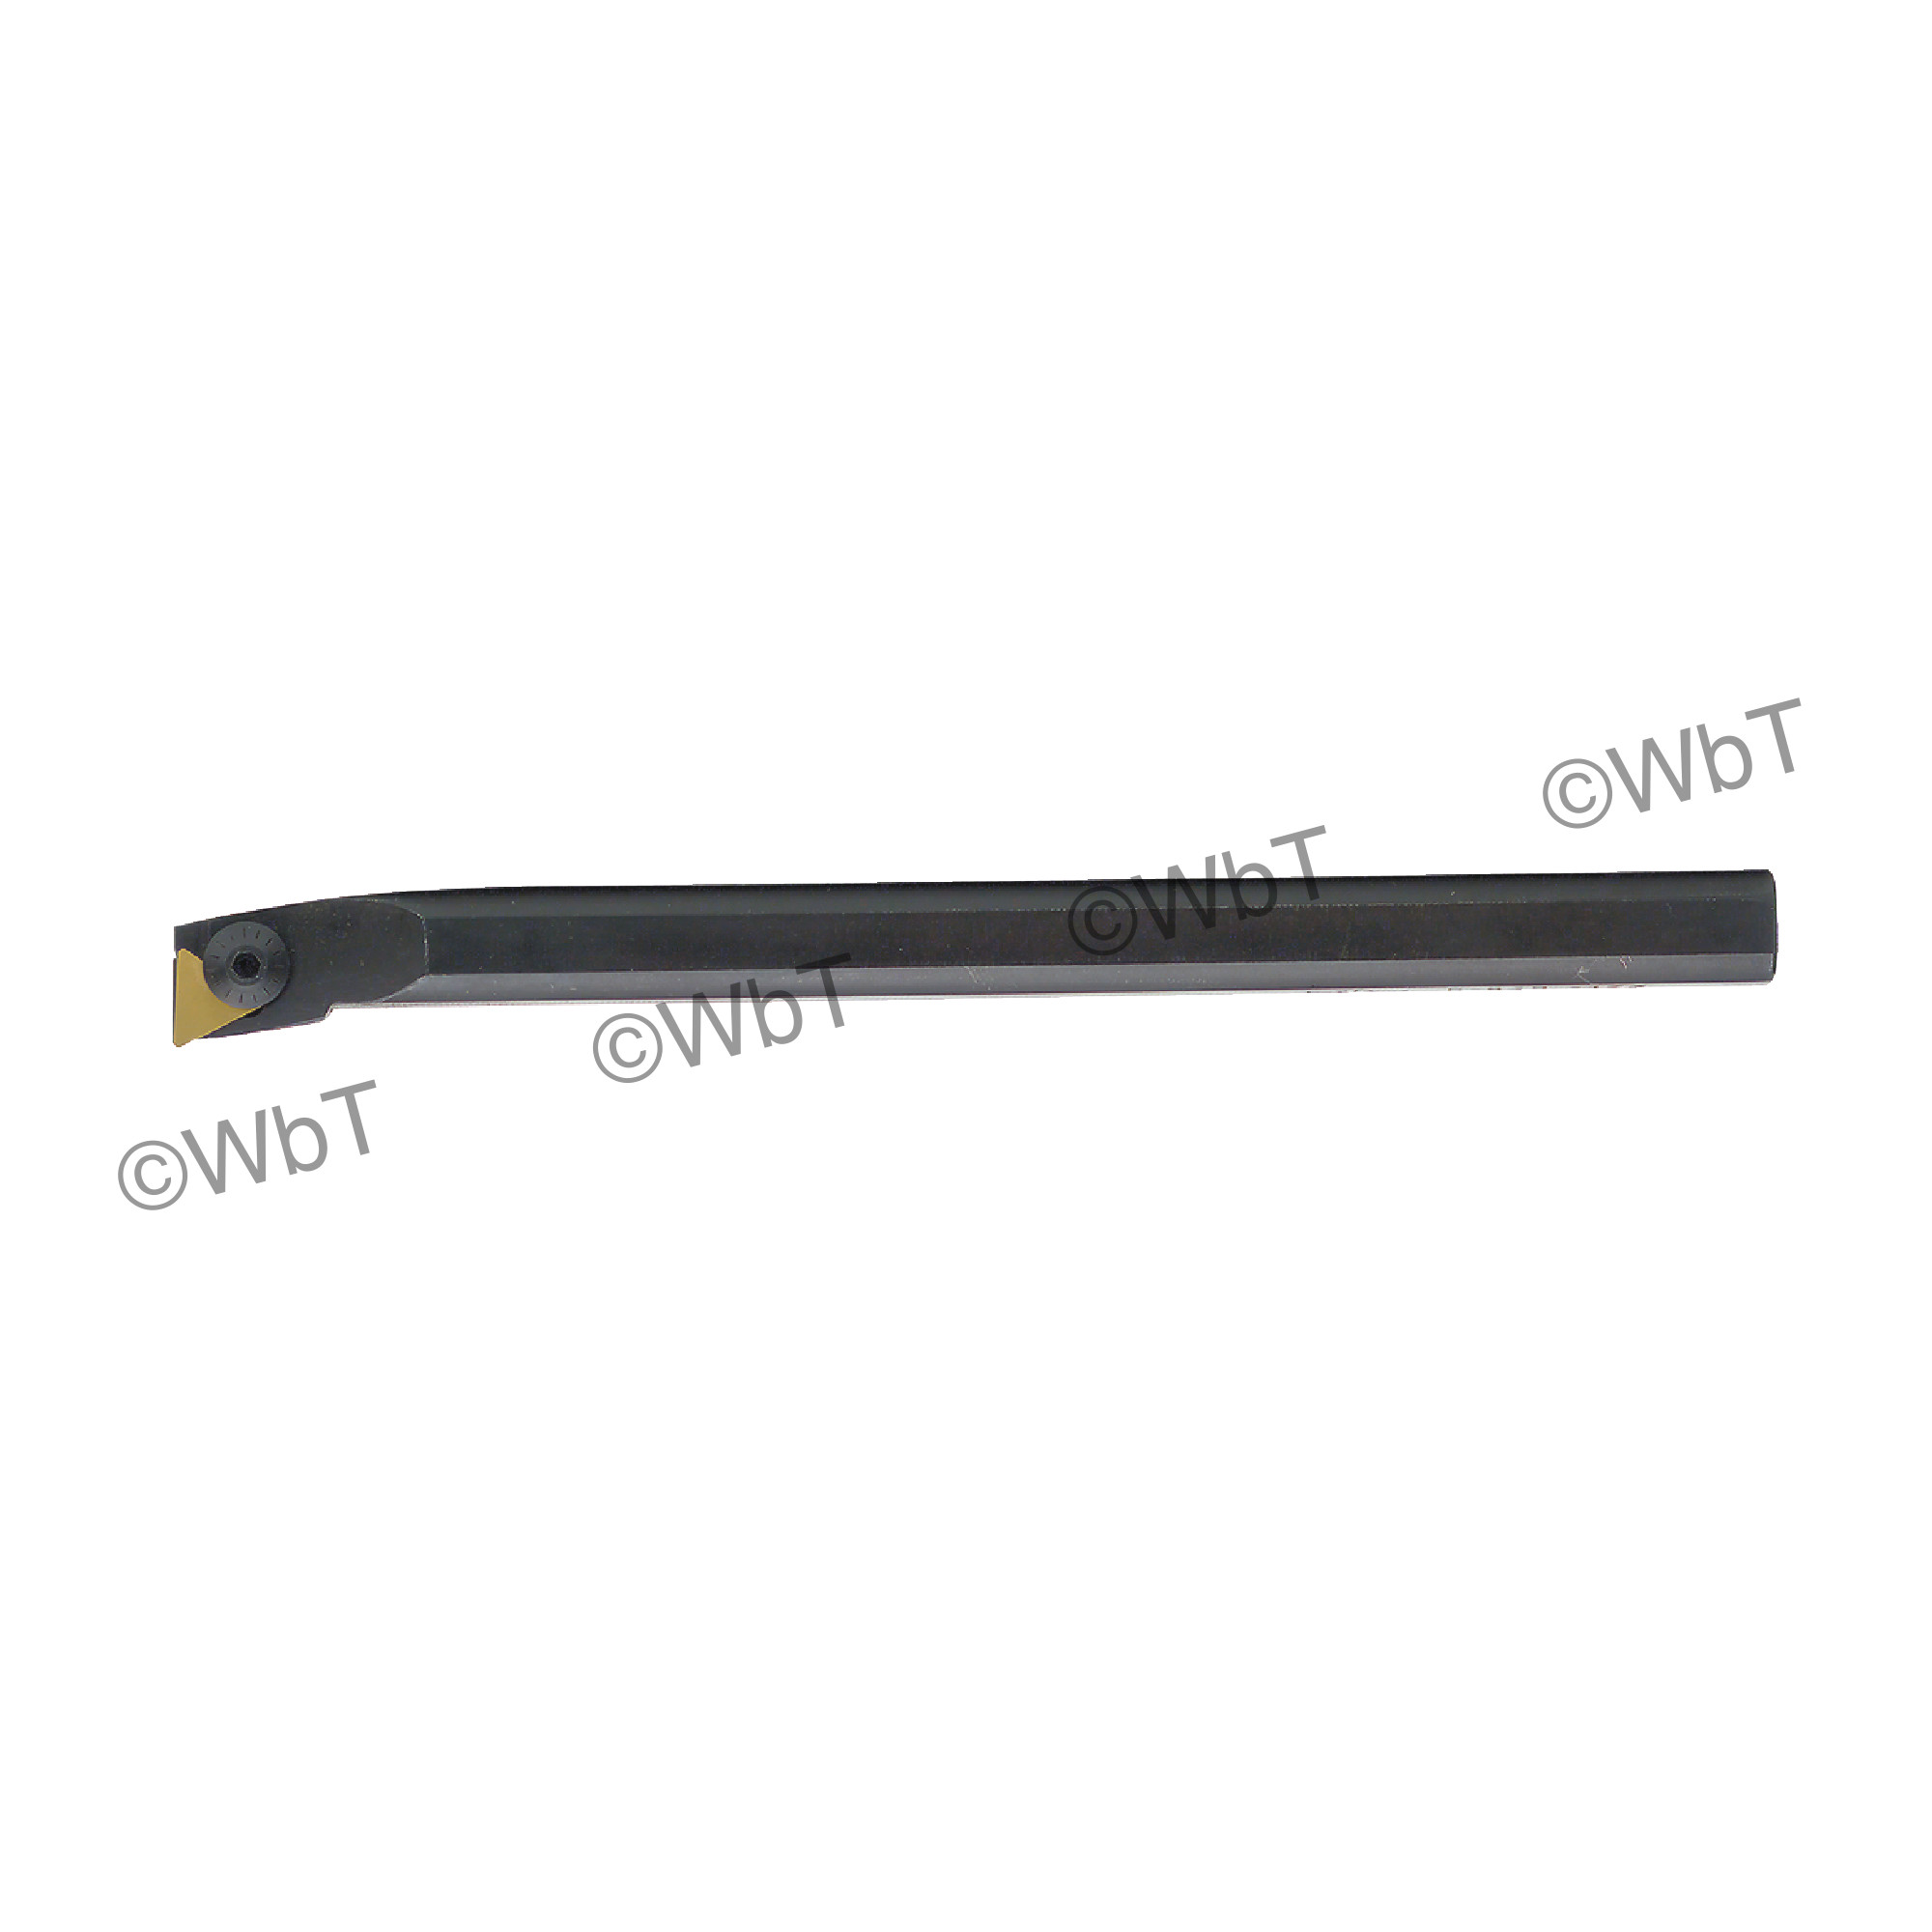 TTC PRODUCTION - T-6-939-178 / Steel Boring Bar / 2.000" Shank / TPG43_ / Right Hand